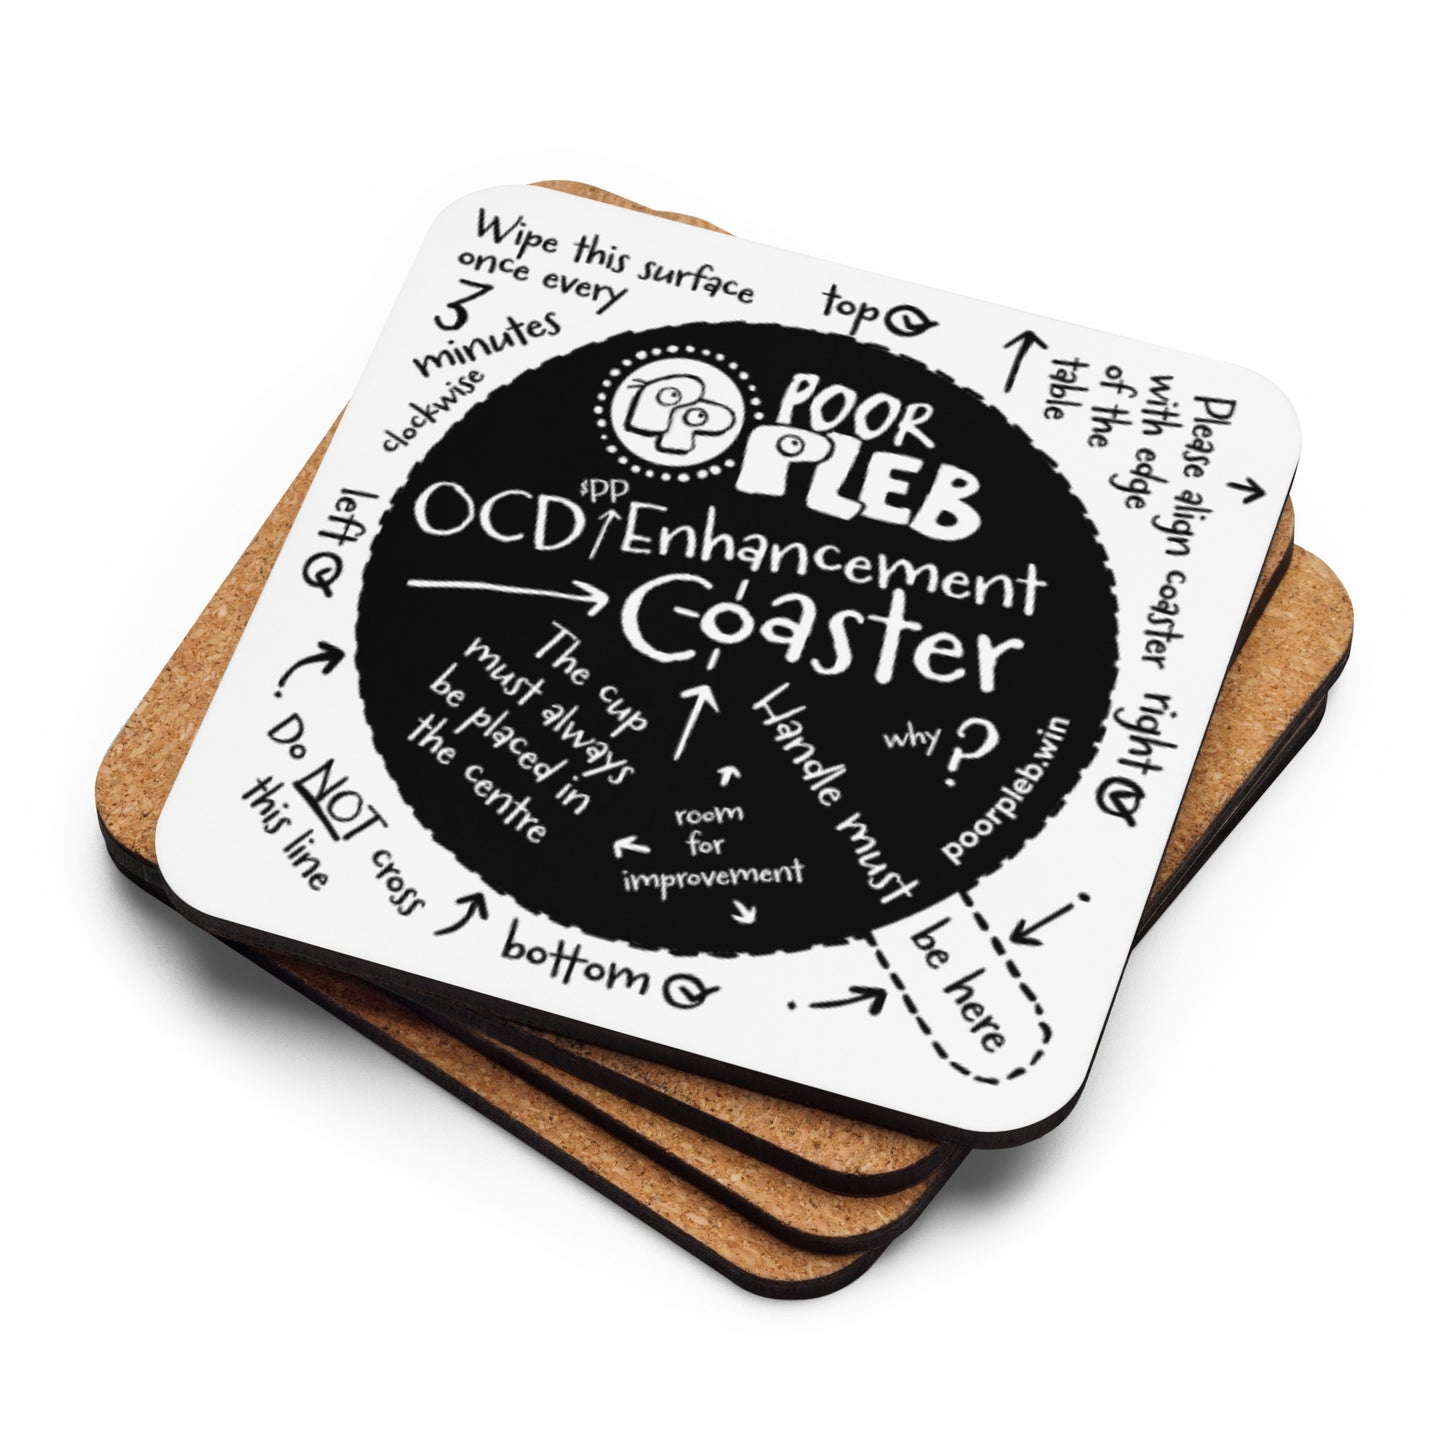 Poor Pleb OCD Enhancement Coaster - Advanced